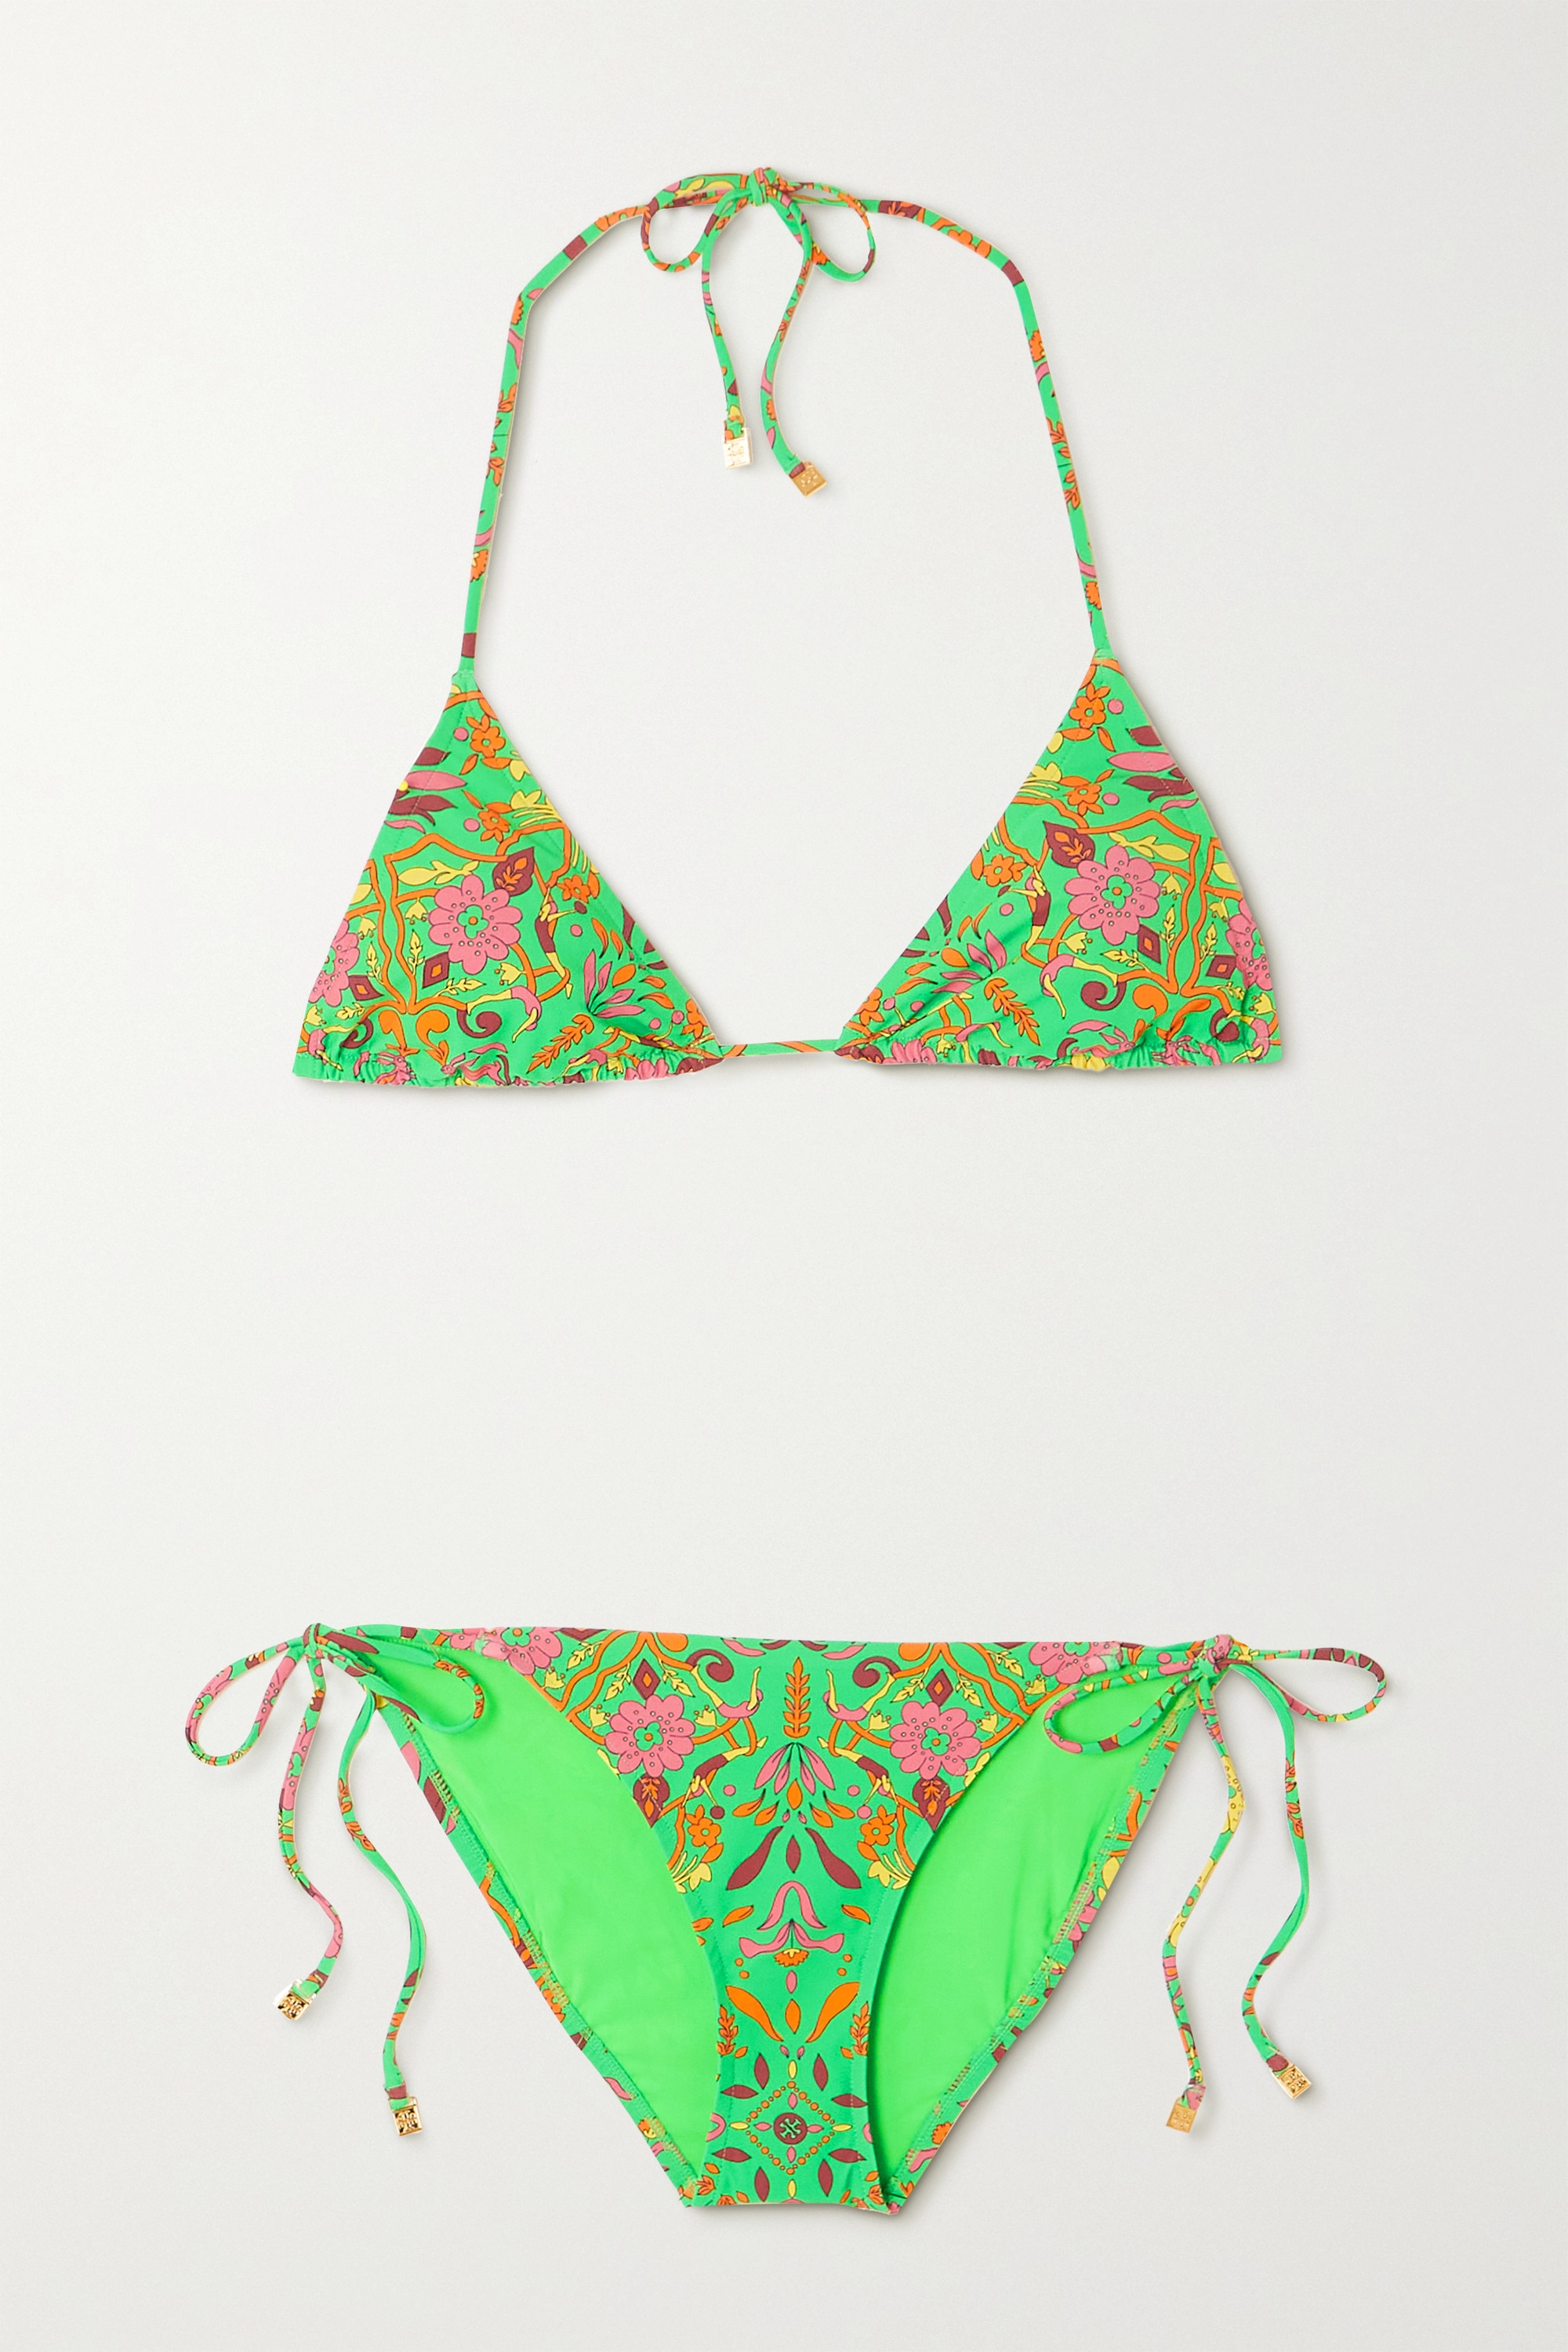 Tory Burch Floral-Print Triangle Halterneck Bikini